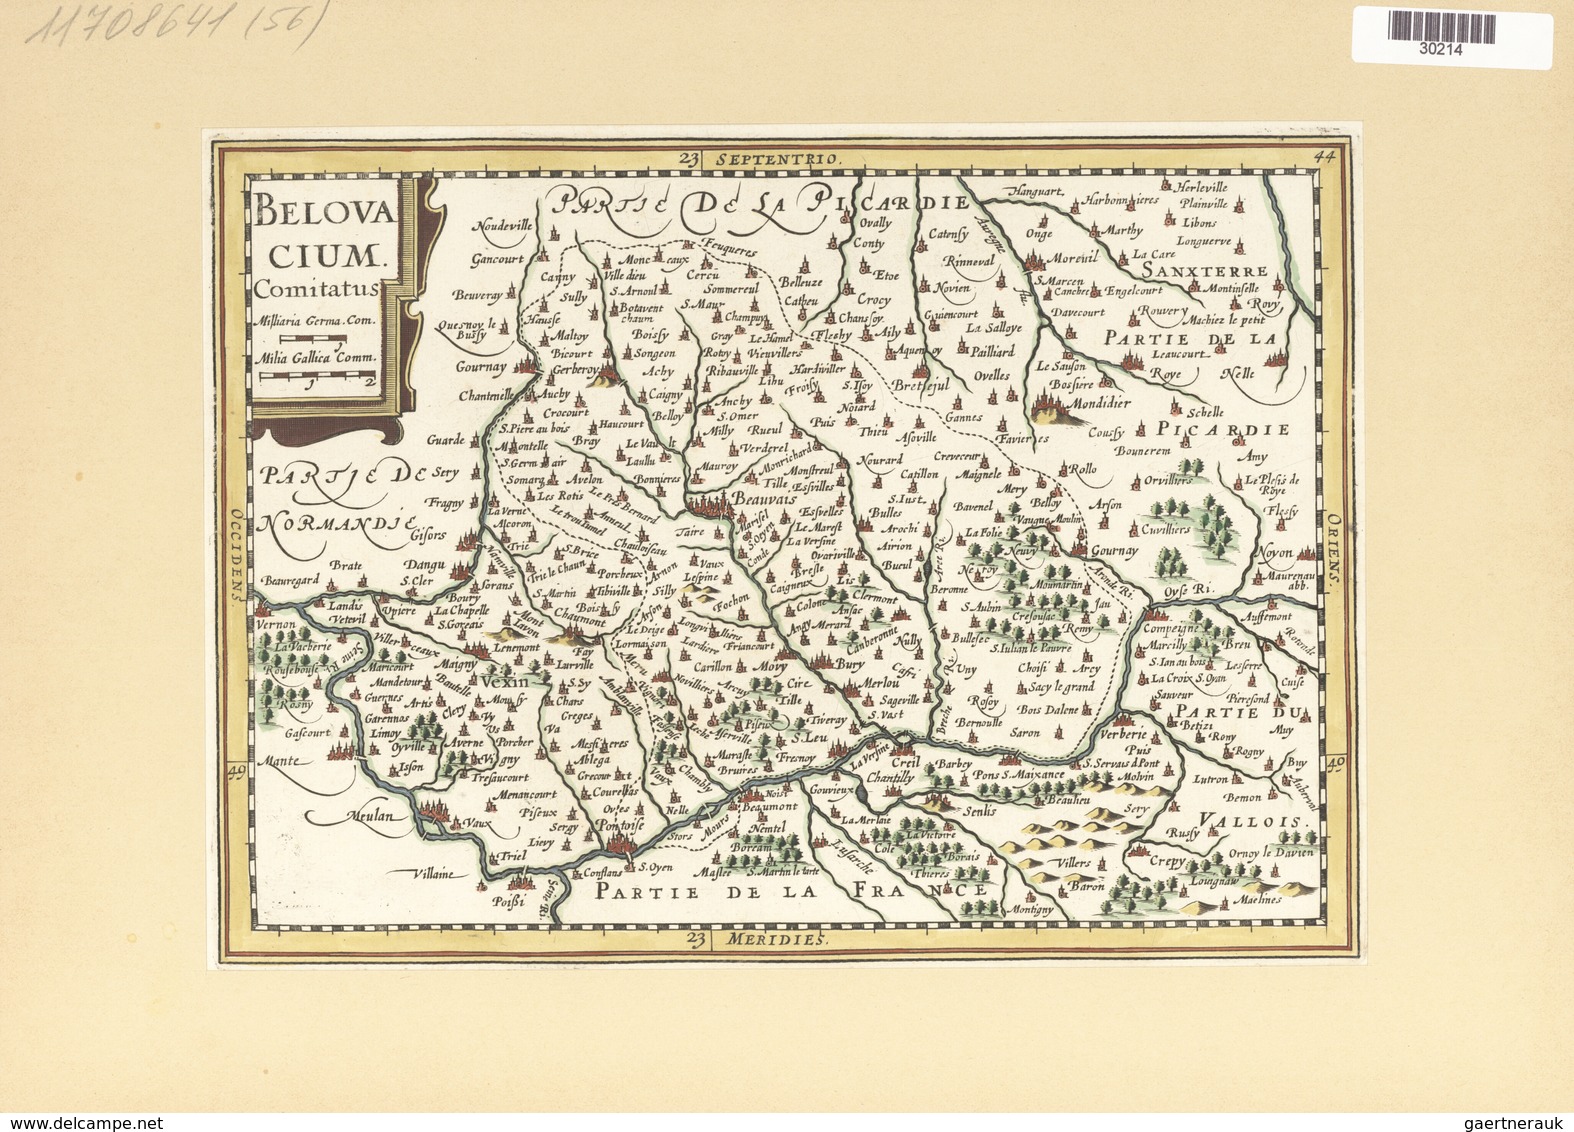 Landkarten Und Stiche: 1734. Belovacium Comitatus. Map Of The Beauvais Region Of France, Published I - Geographie